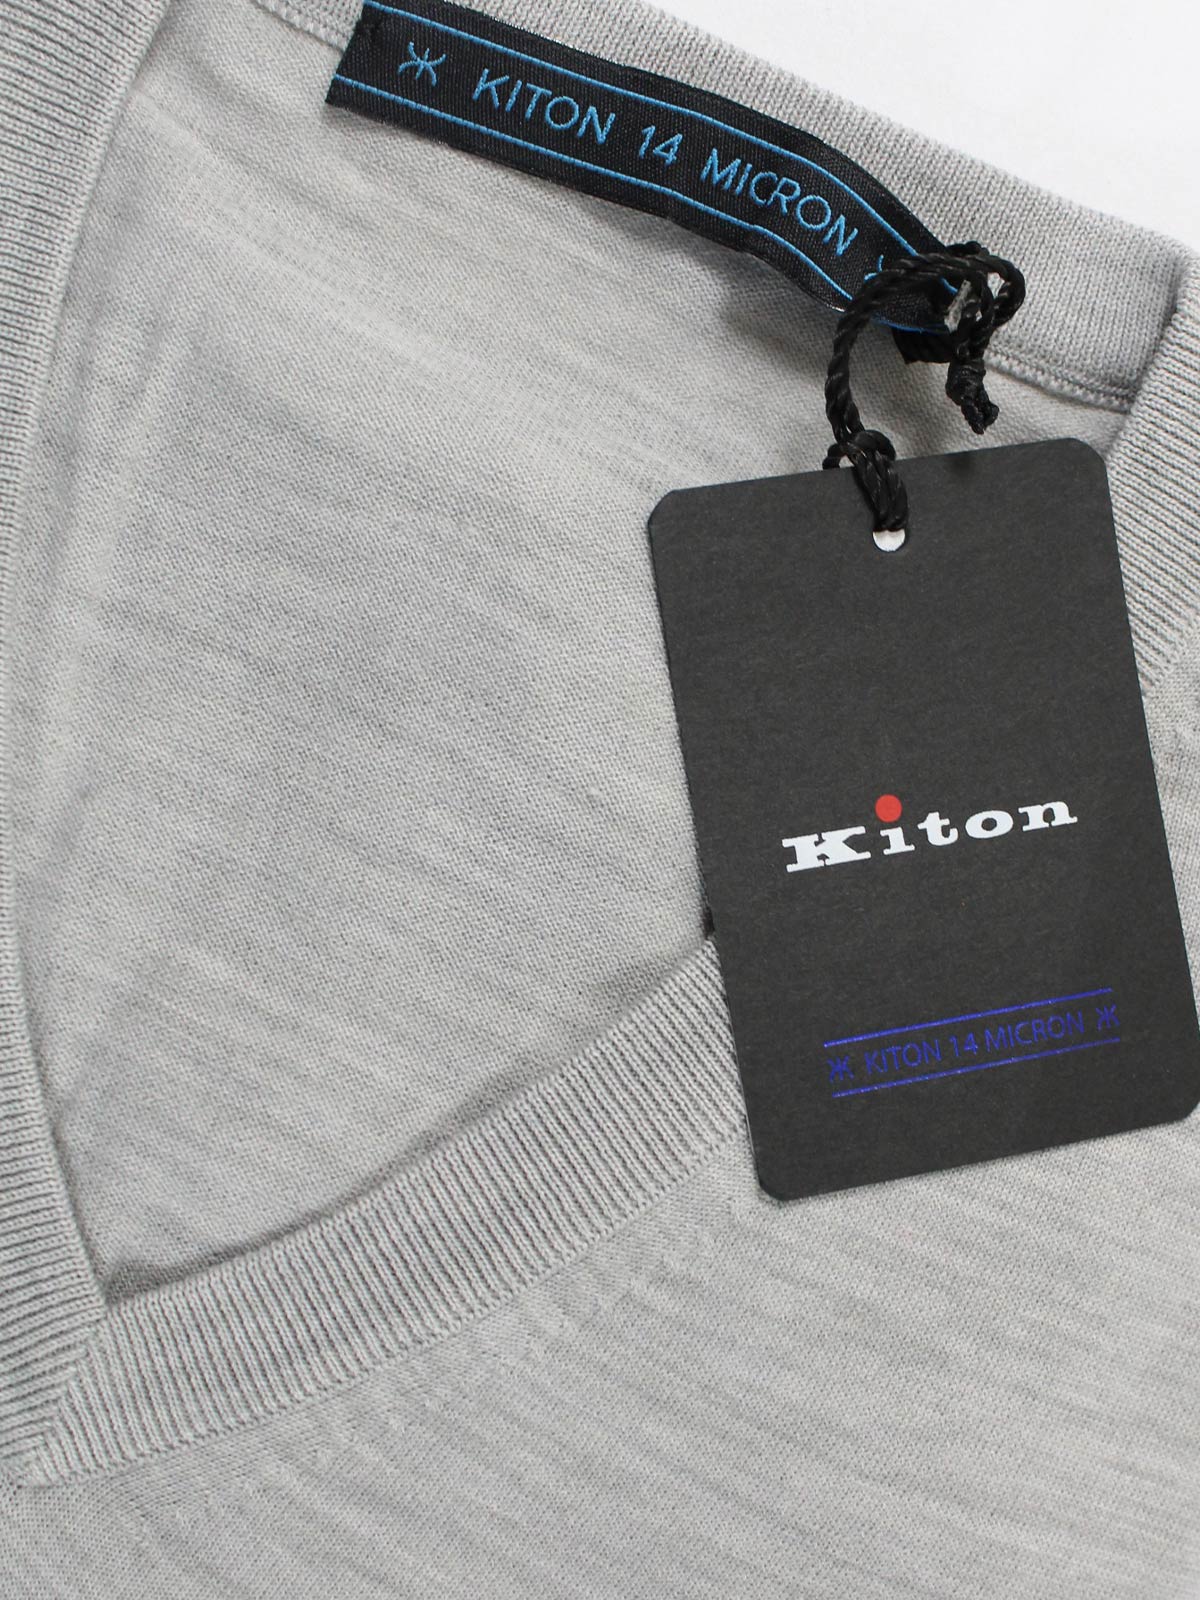 Kiton Sweater Light Gray 14 Micron Wool V-Neck 